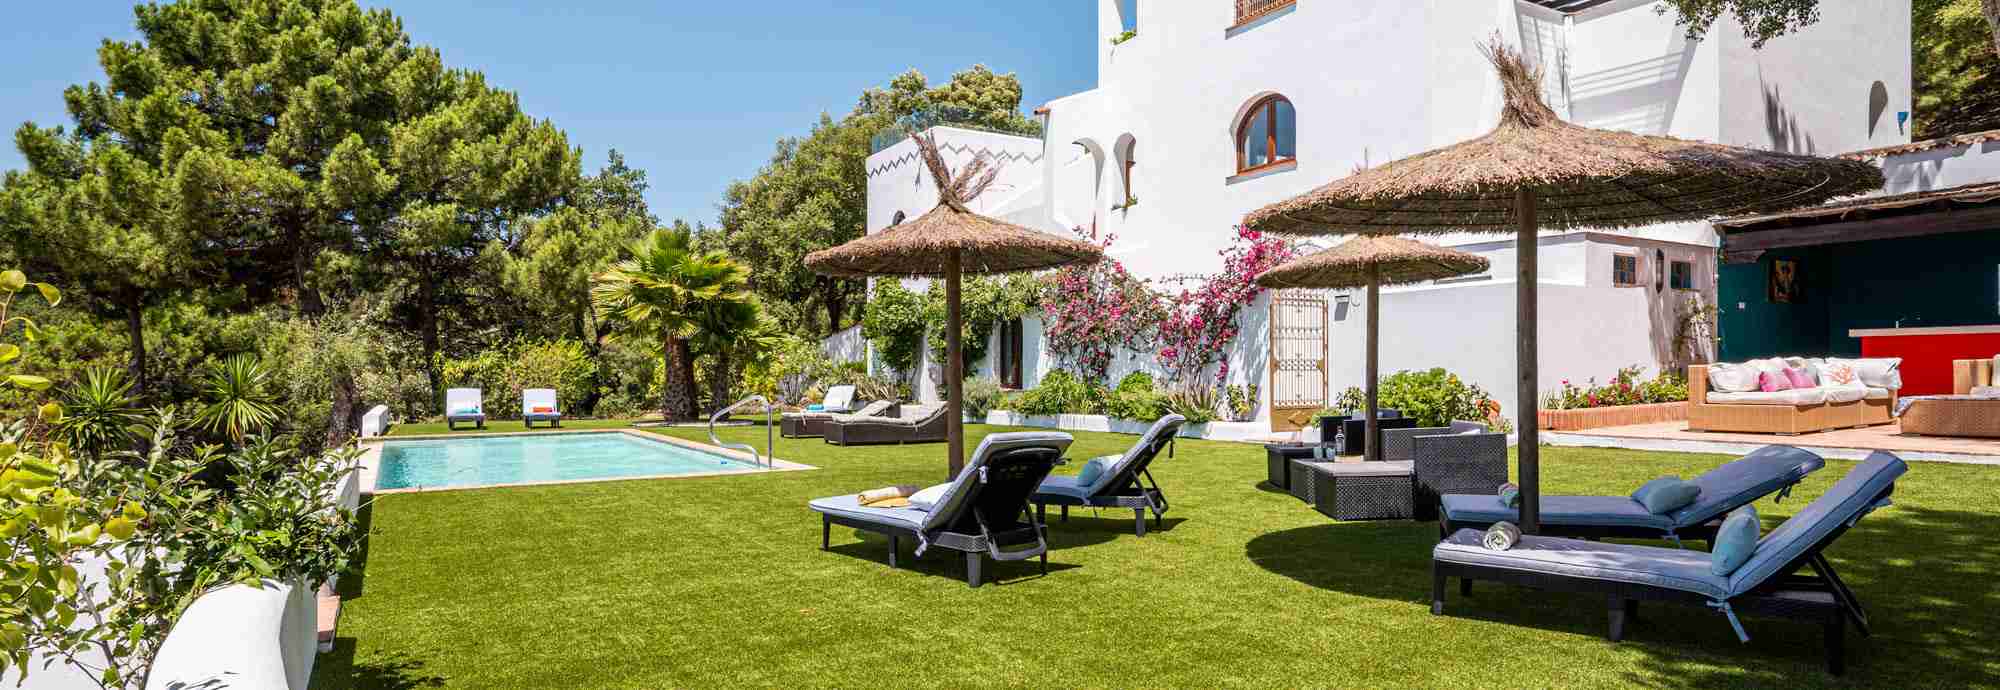 Villa de estilo morisco bien equipada con piscina infinita en un entorno impresionante